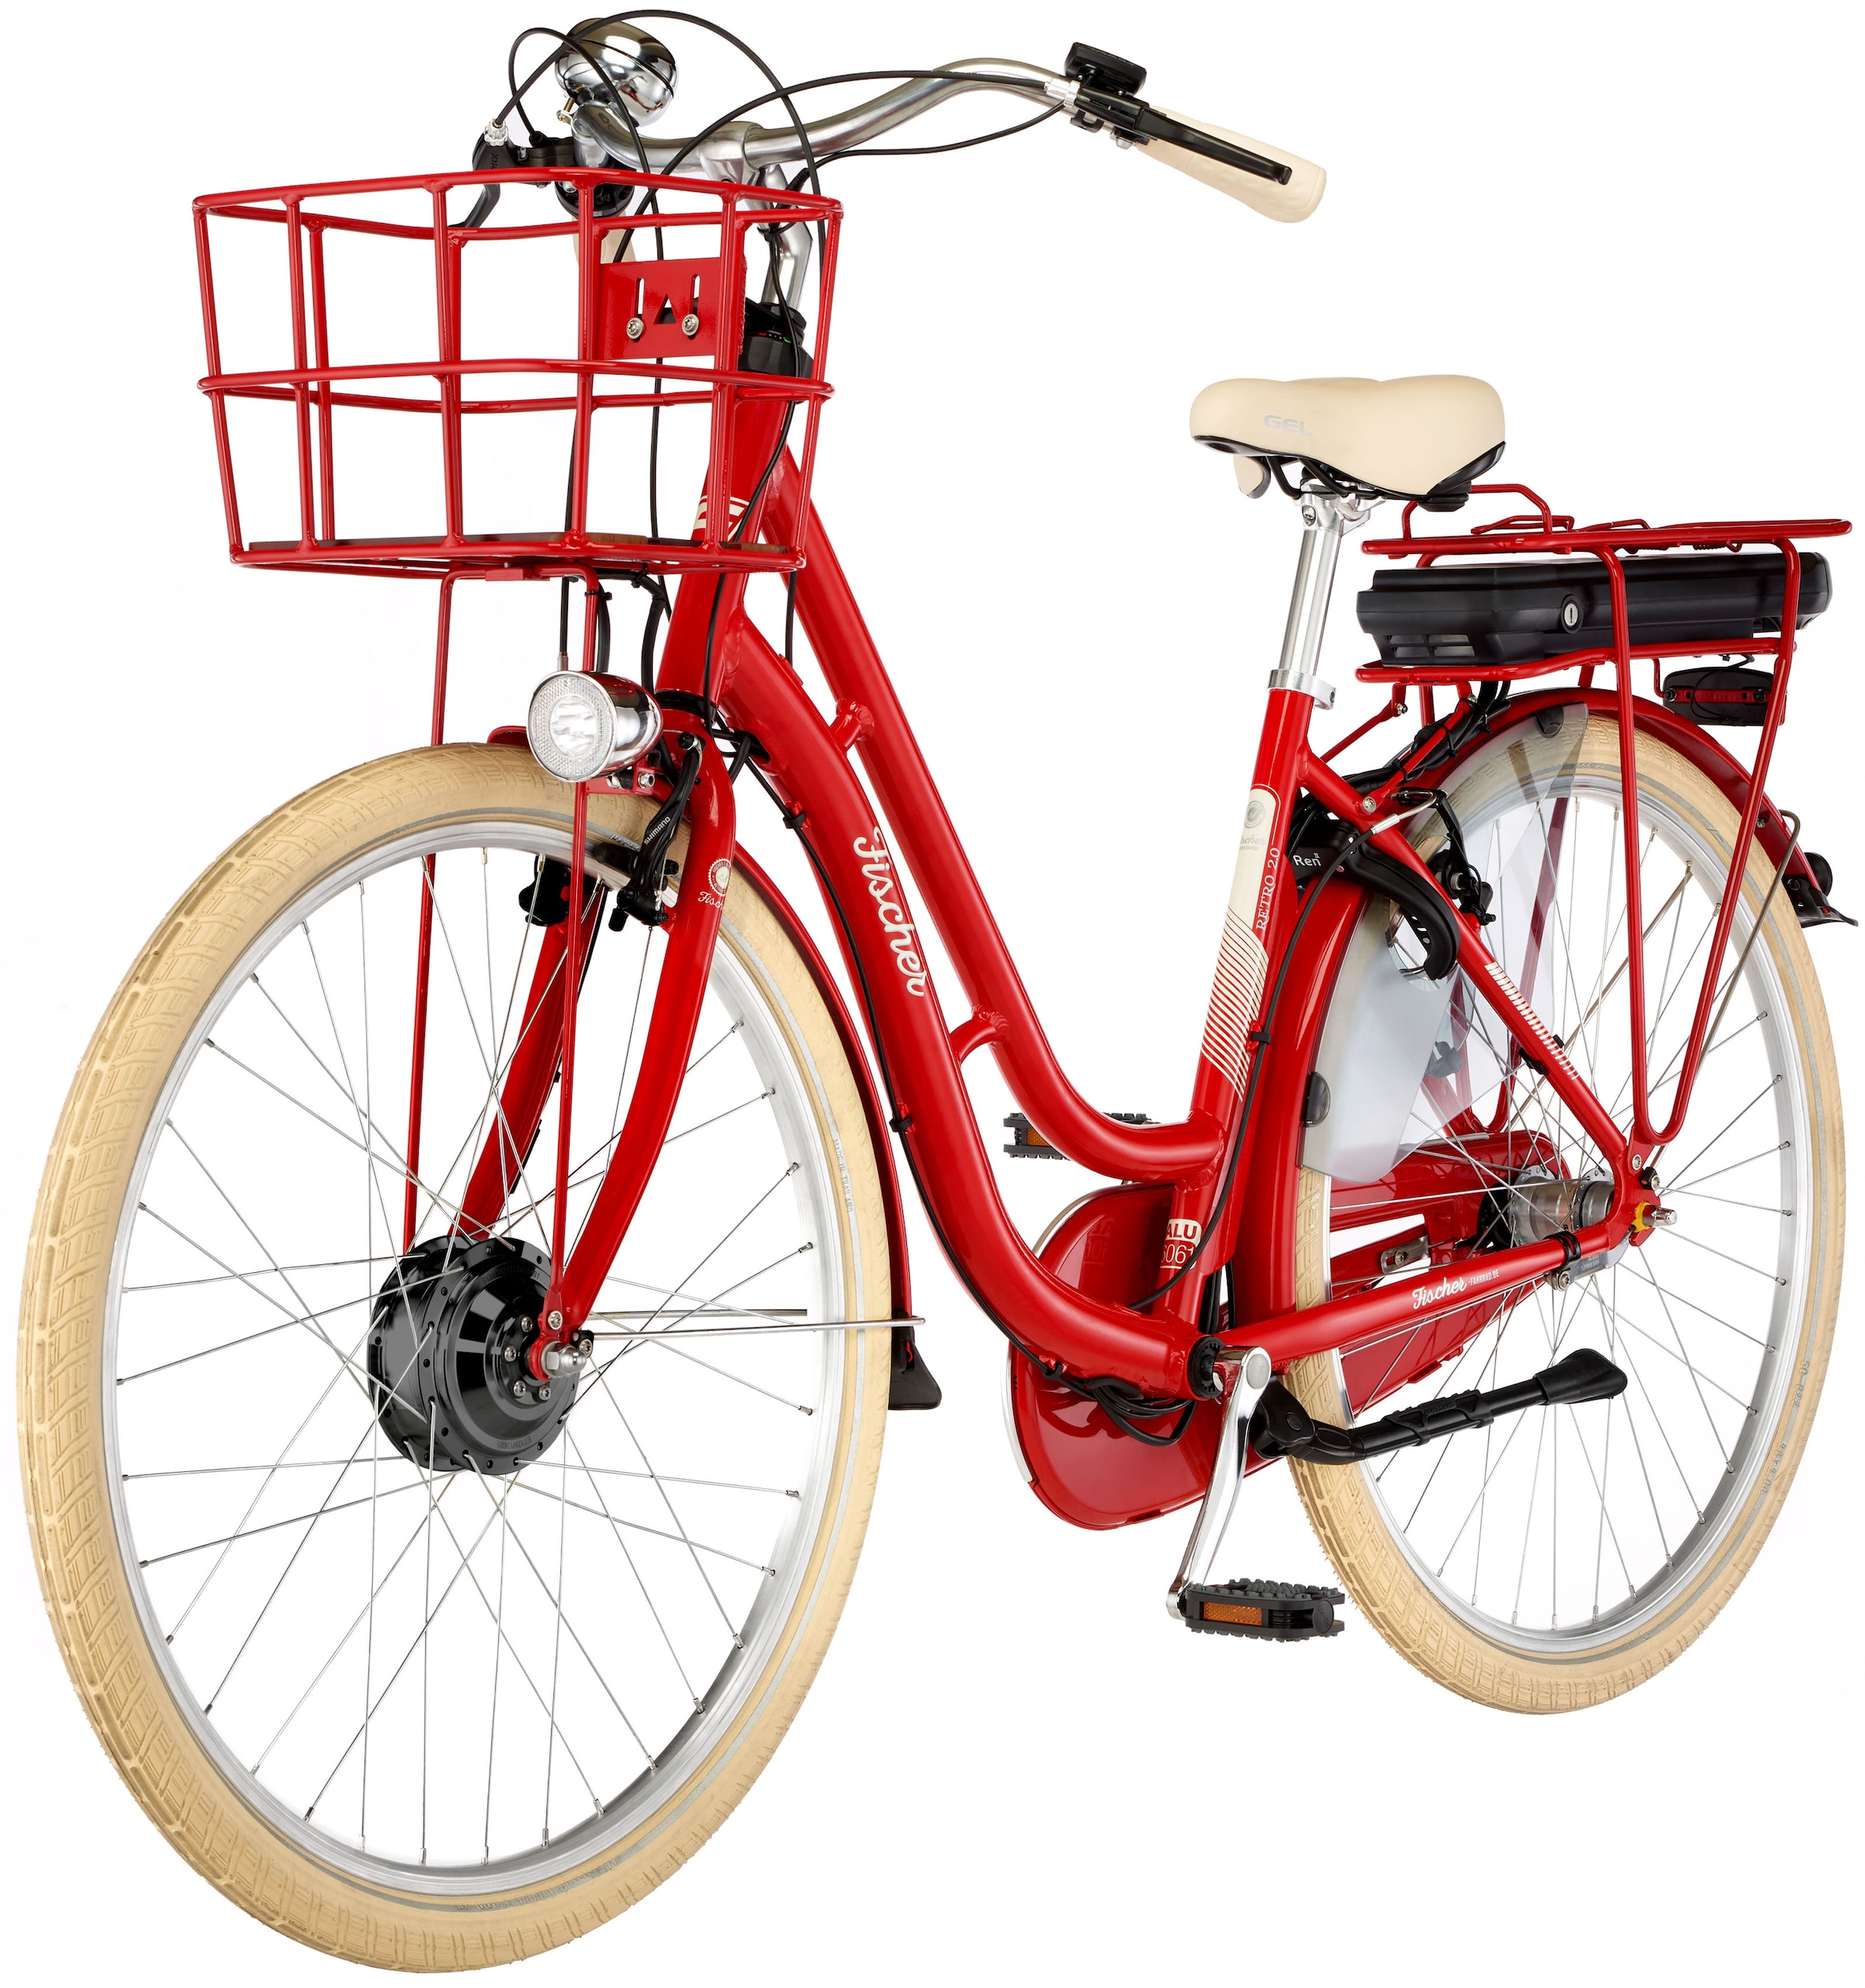 FISCHER Fahrrad E-Bike »CITA RETRO 2.1 317«, 3 Gang, Shimano, Nexus, ebike Damen, Pedelec